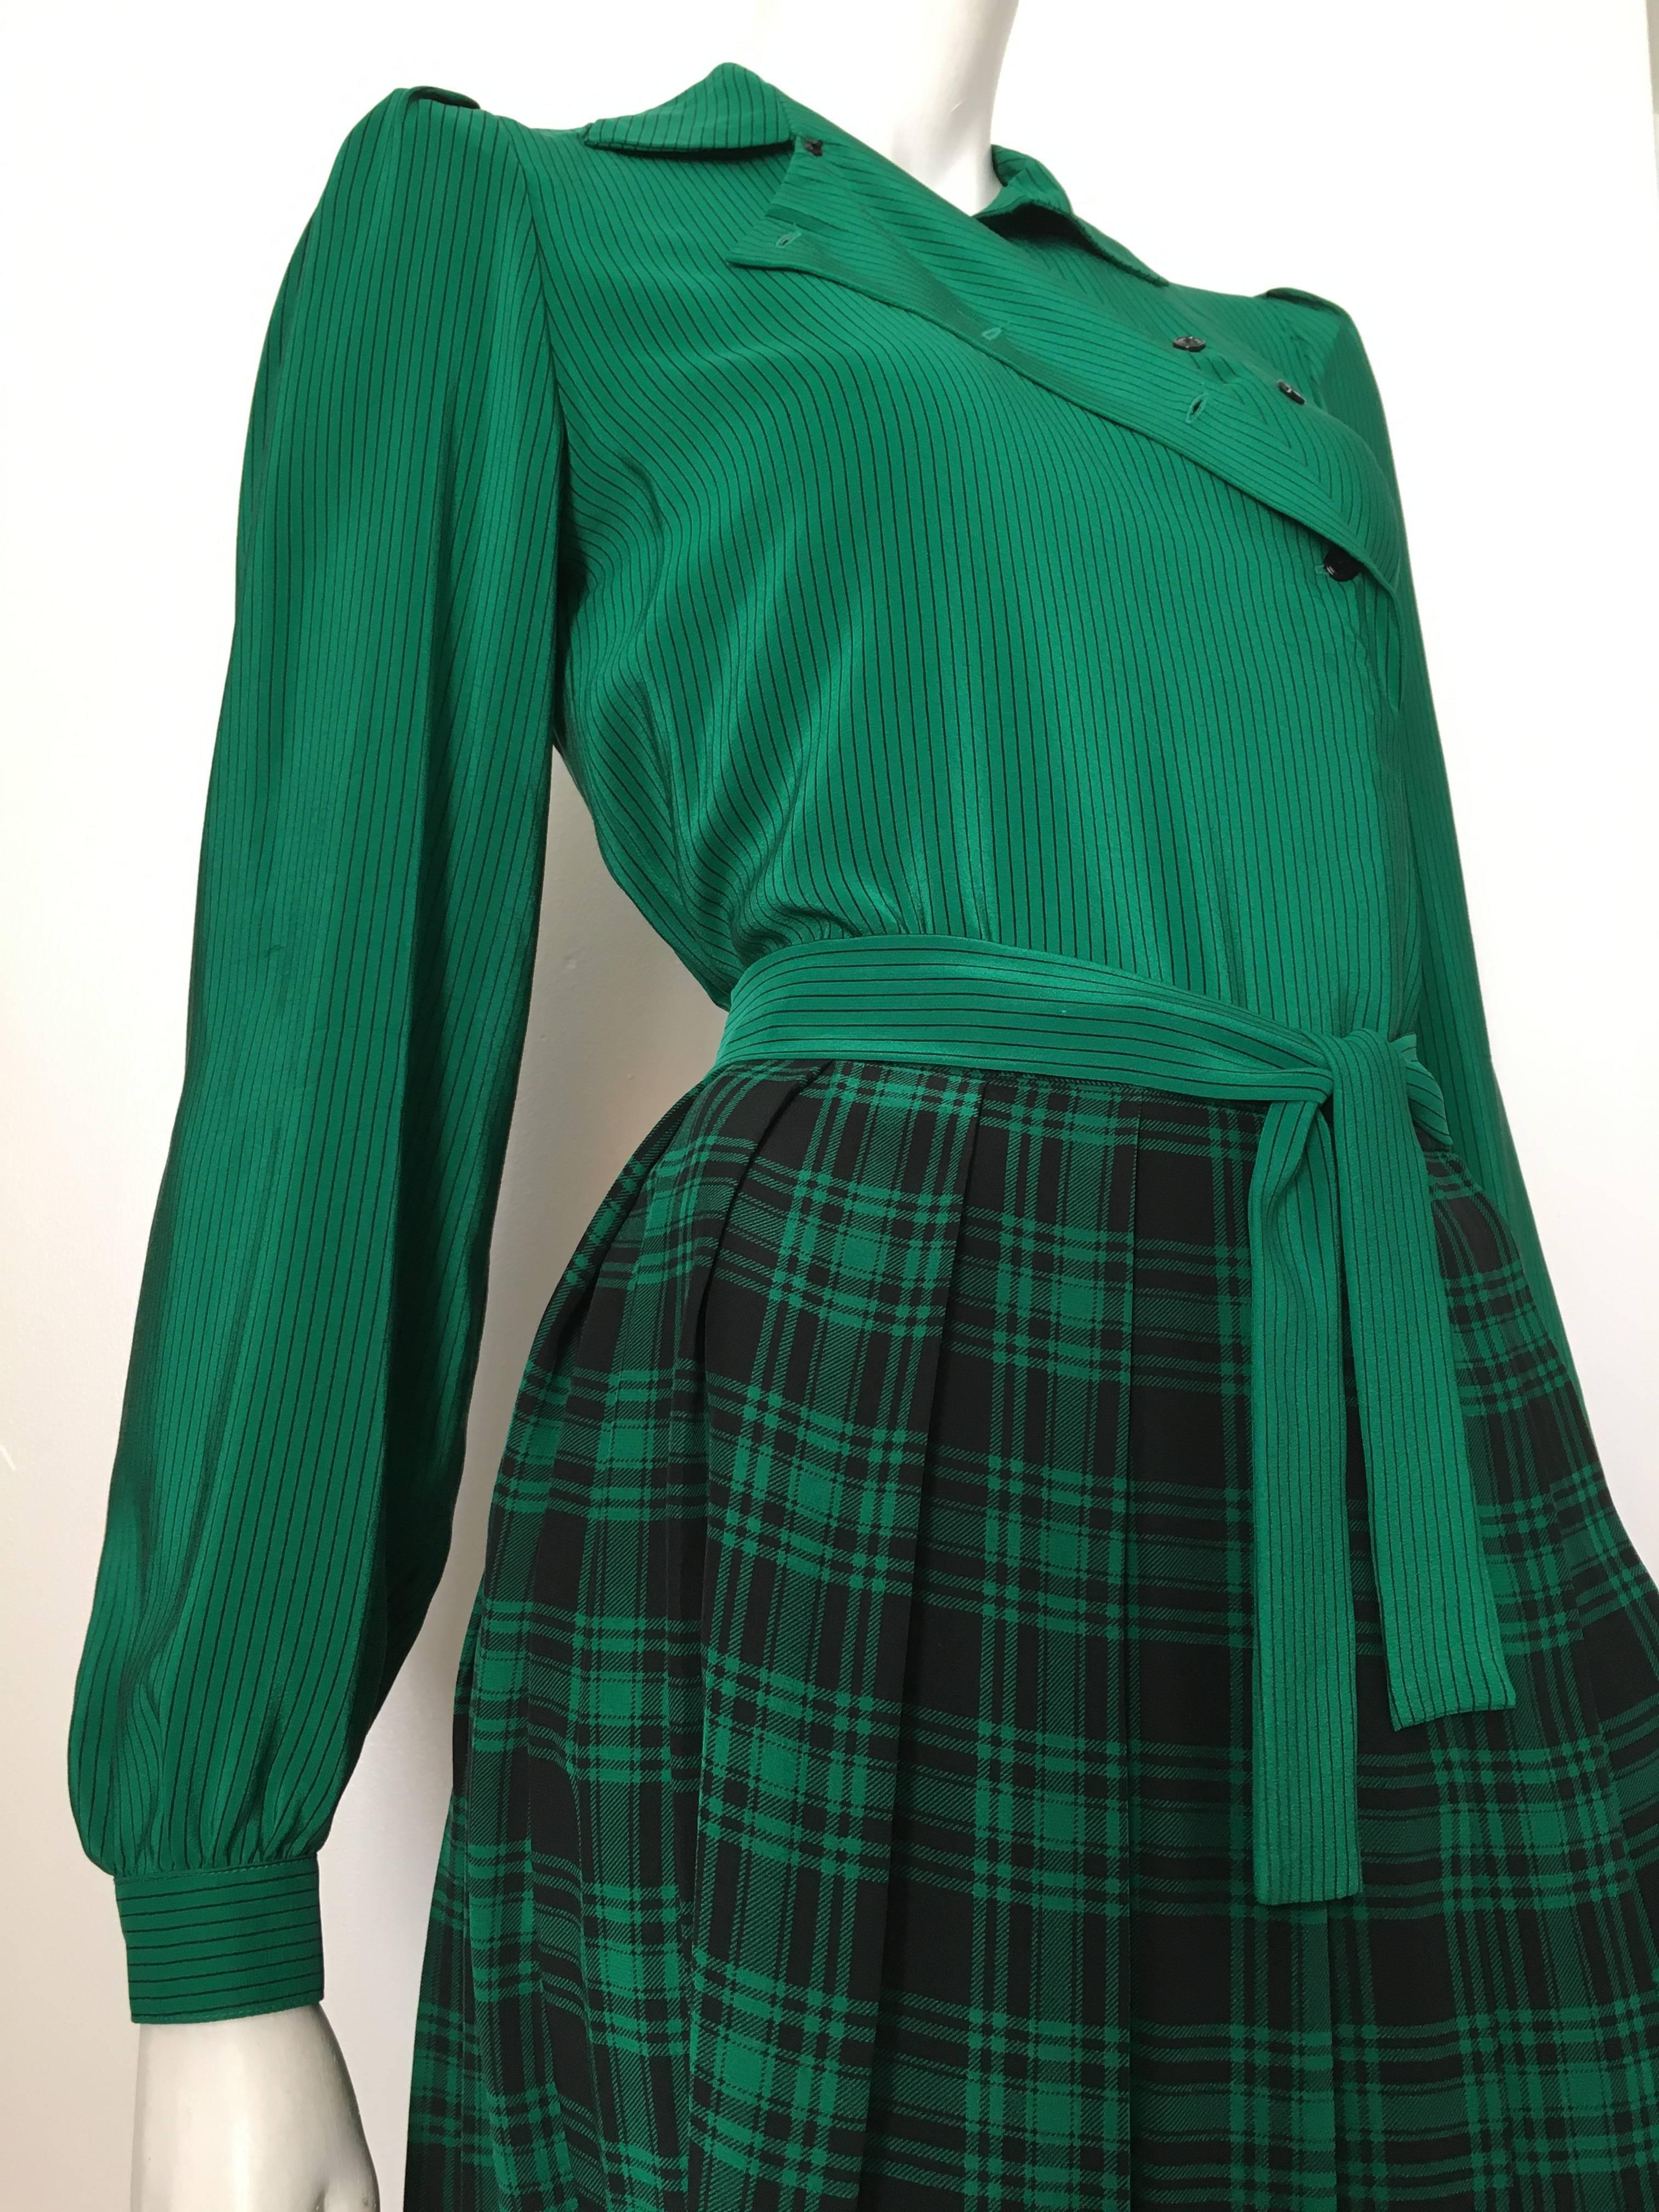 Oscar de la Renta 1980s Silk Striped Blouse & Plaid Pleated Skirt Size 4. 3